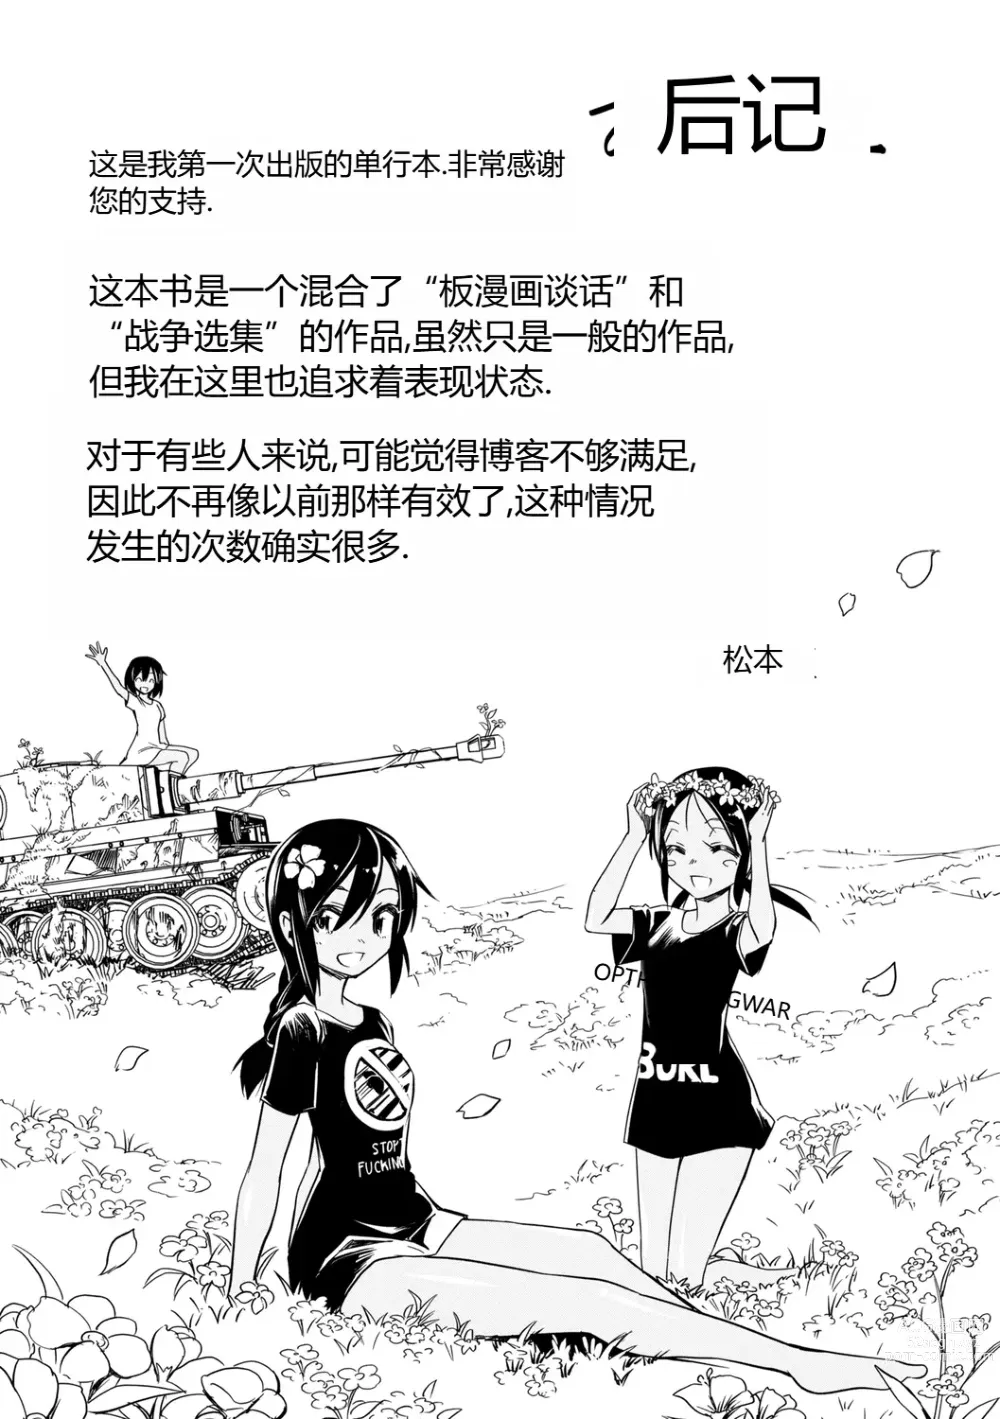 Page 209 of manga Nikugyaku Egoism